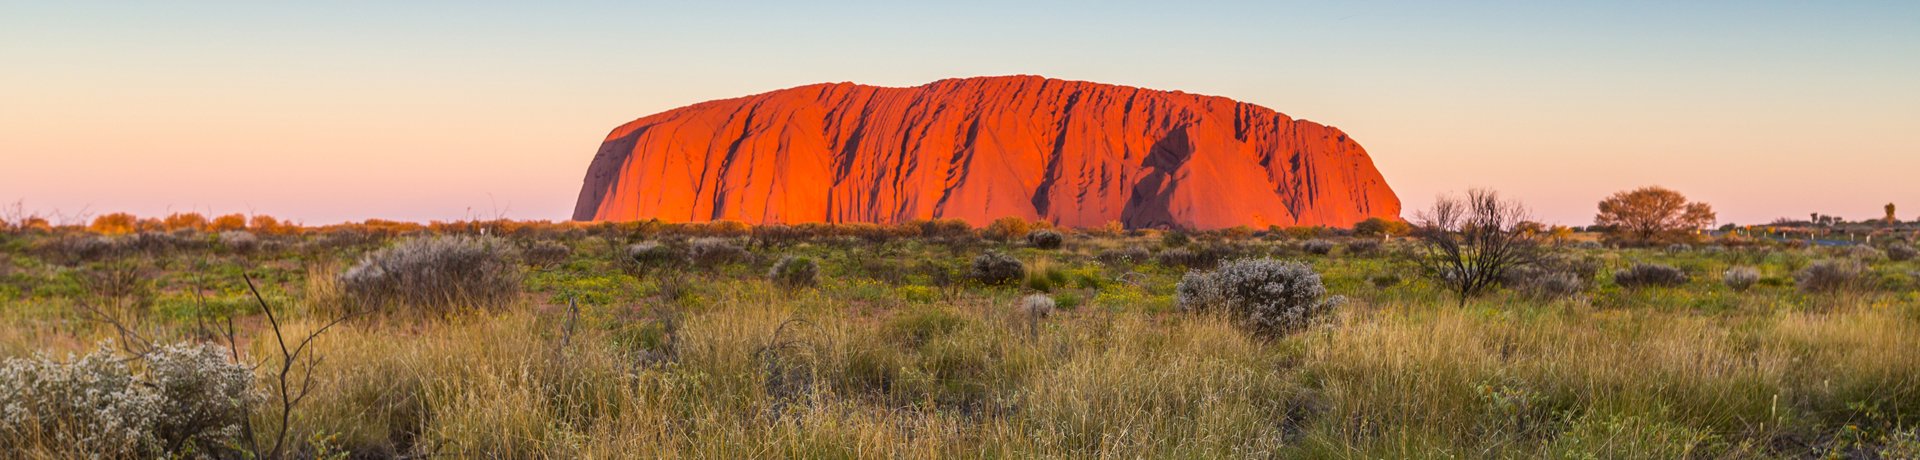 Ayers Rock, Australia